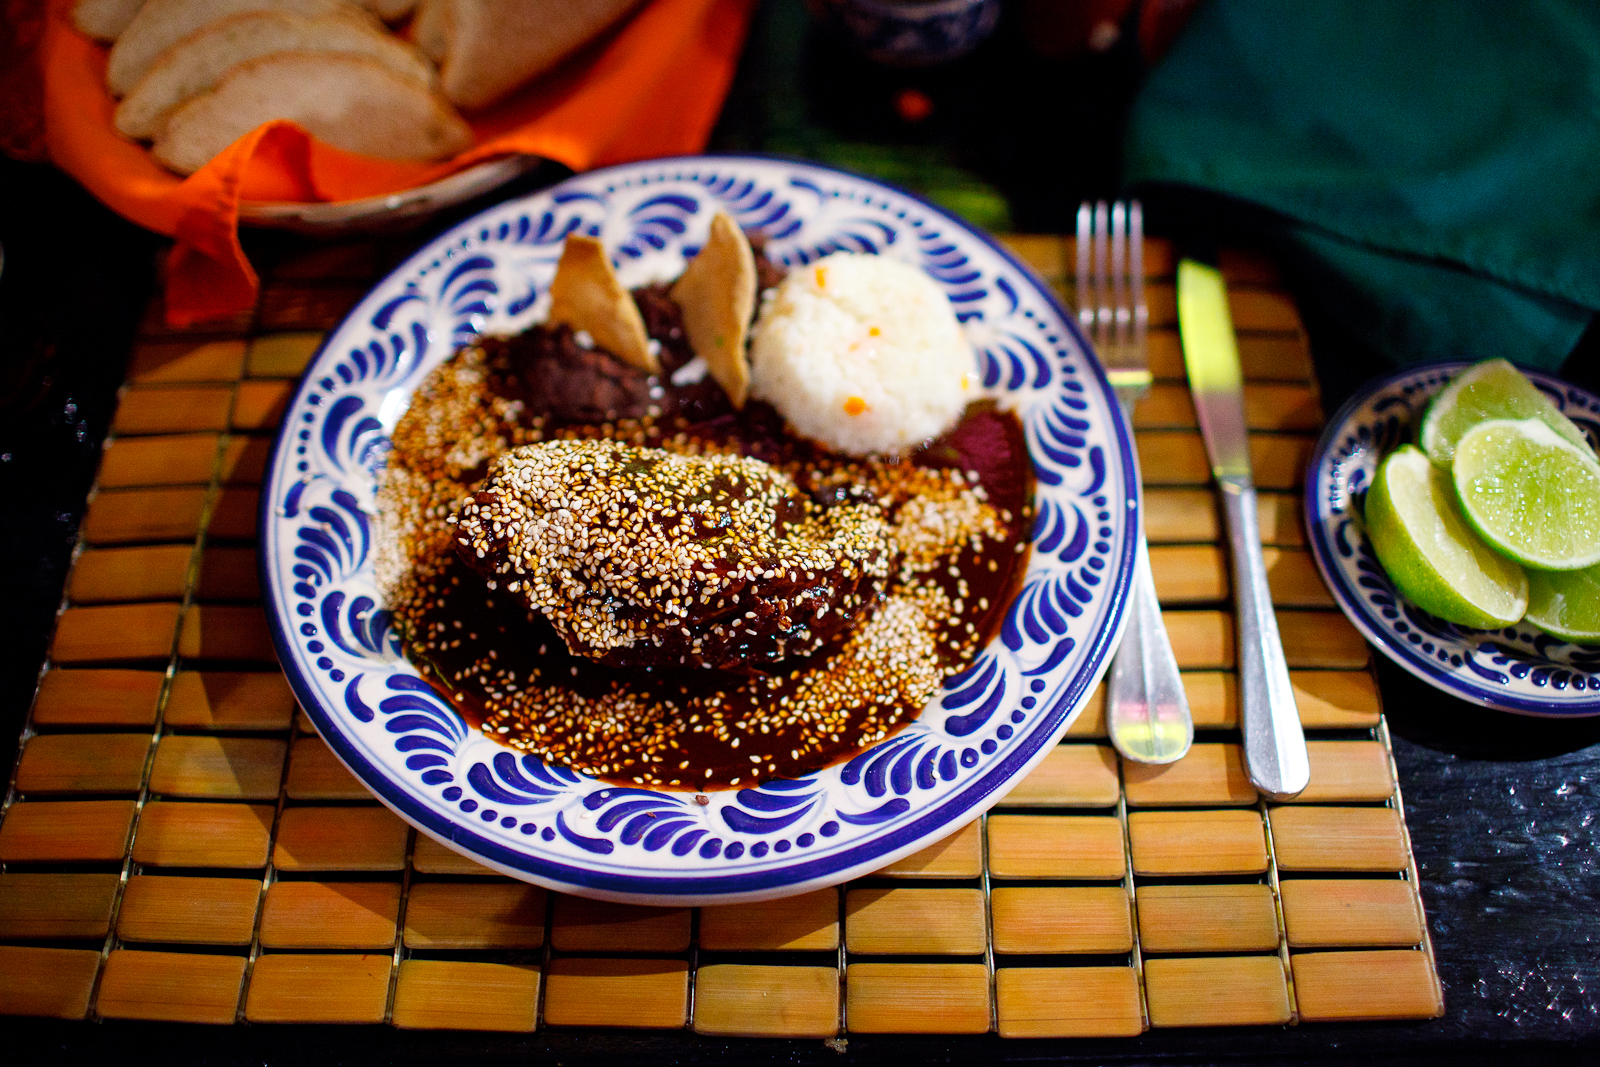 El platillo nacional de México. Mole poblano con pechuga de pollo (The national dish of Mexico. Pueblan mole with chicken breast) ($120 MXP)